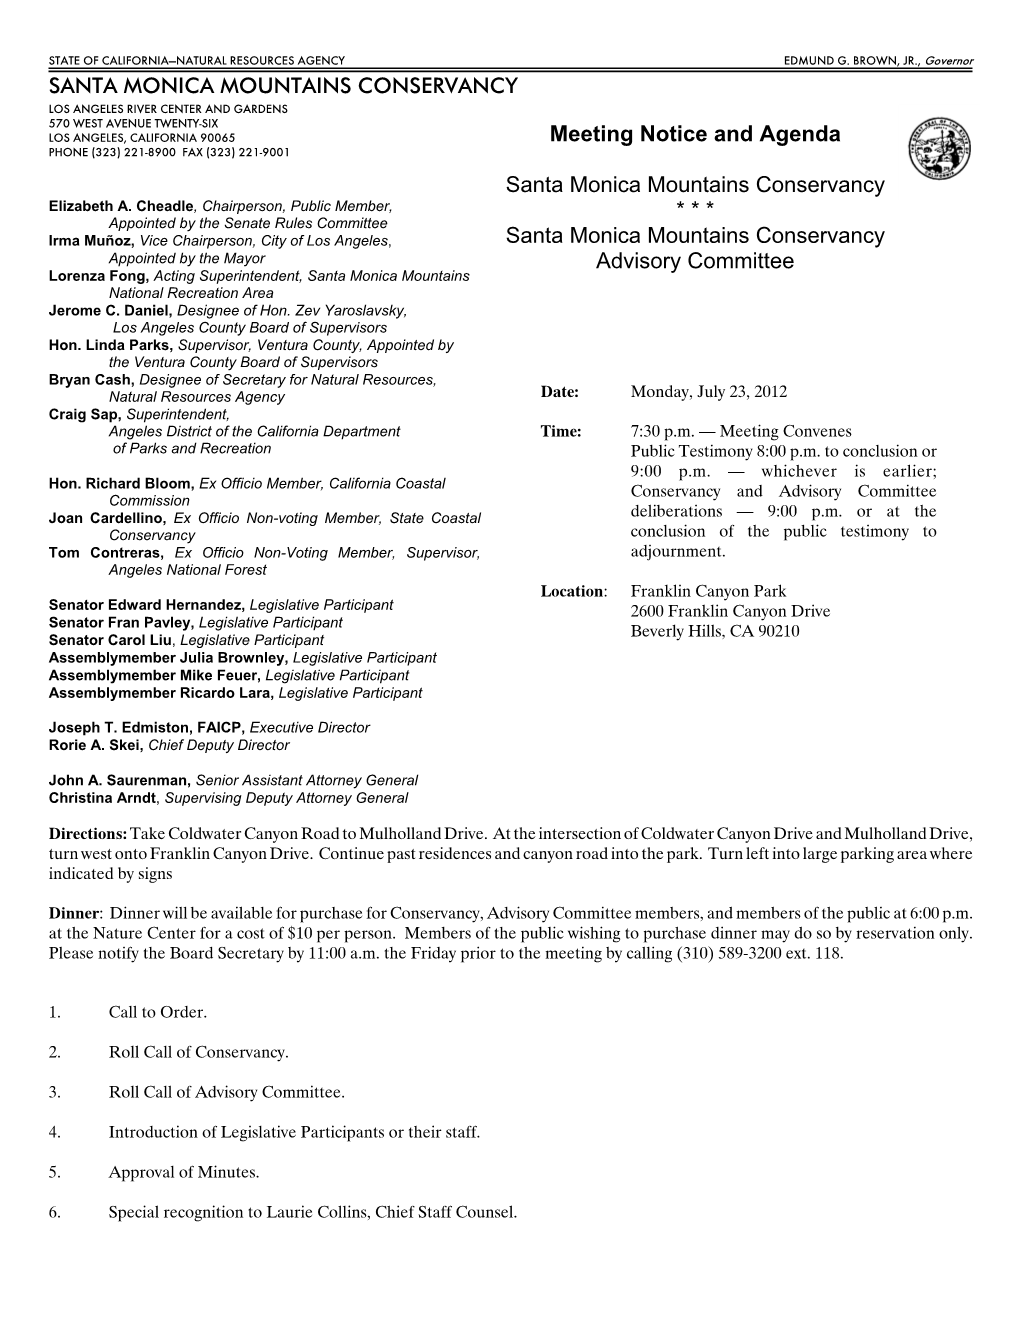 Meeting Notice and Agenda Santa Monica Mountains Conservancy